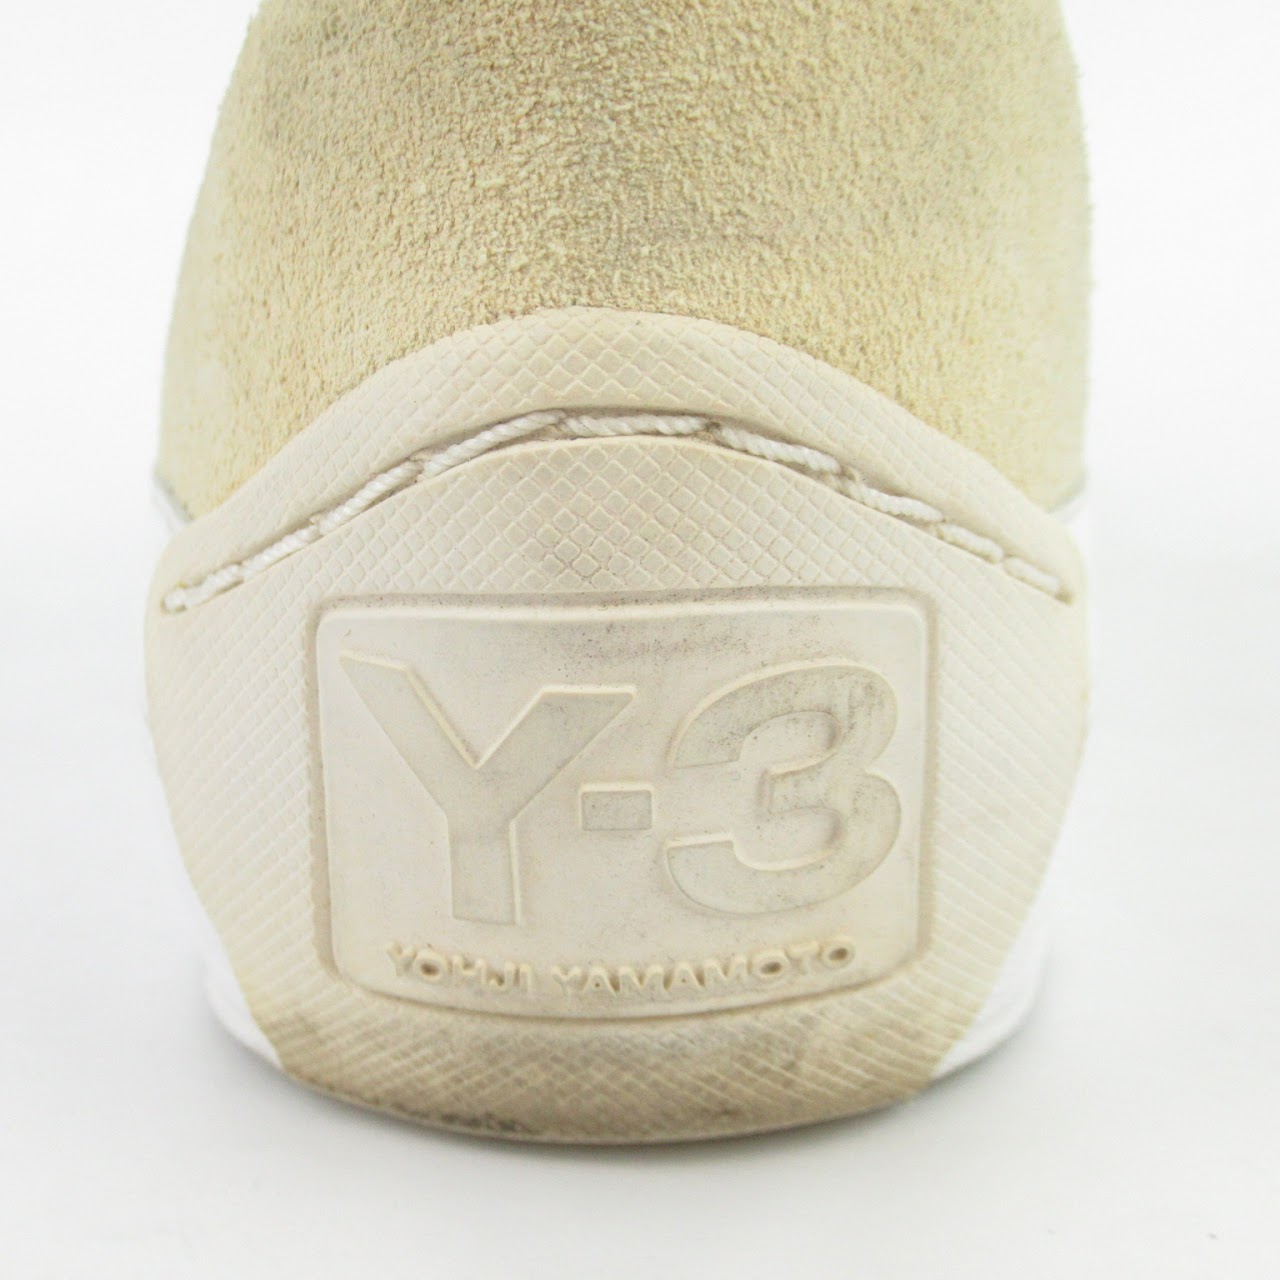 Y3 Yohji Yamamoto X Adidas High Tops